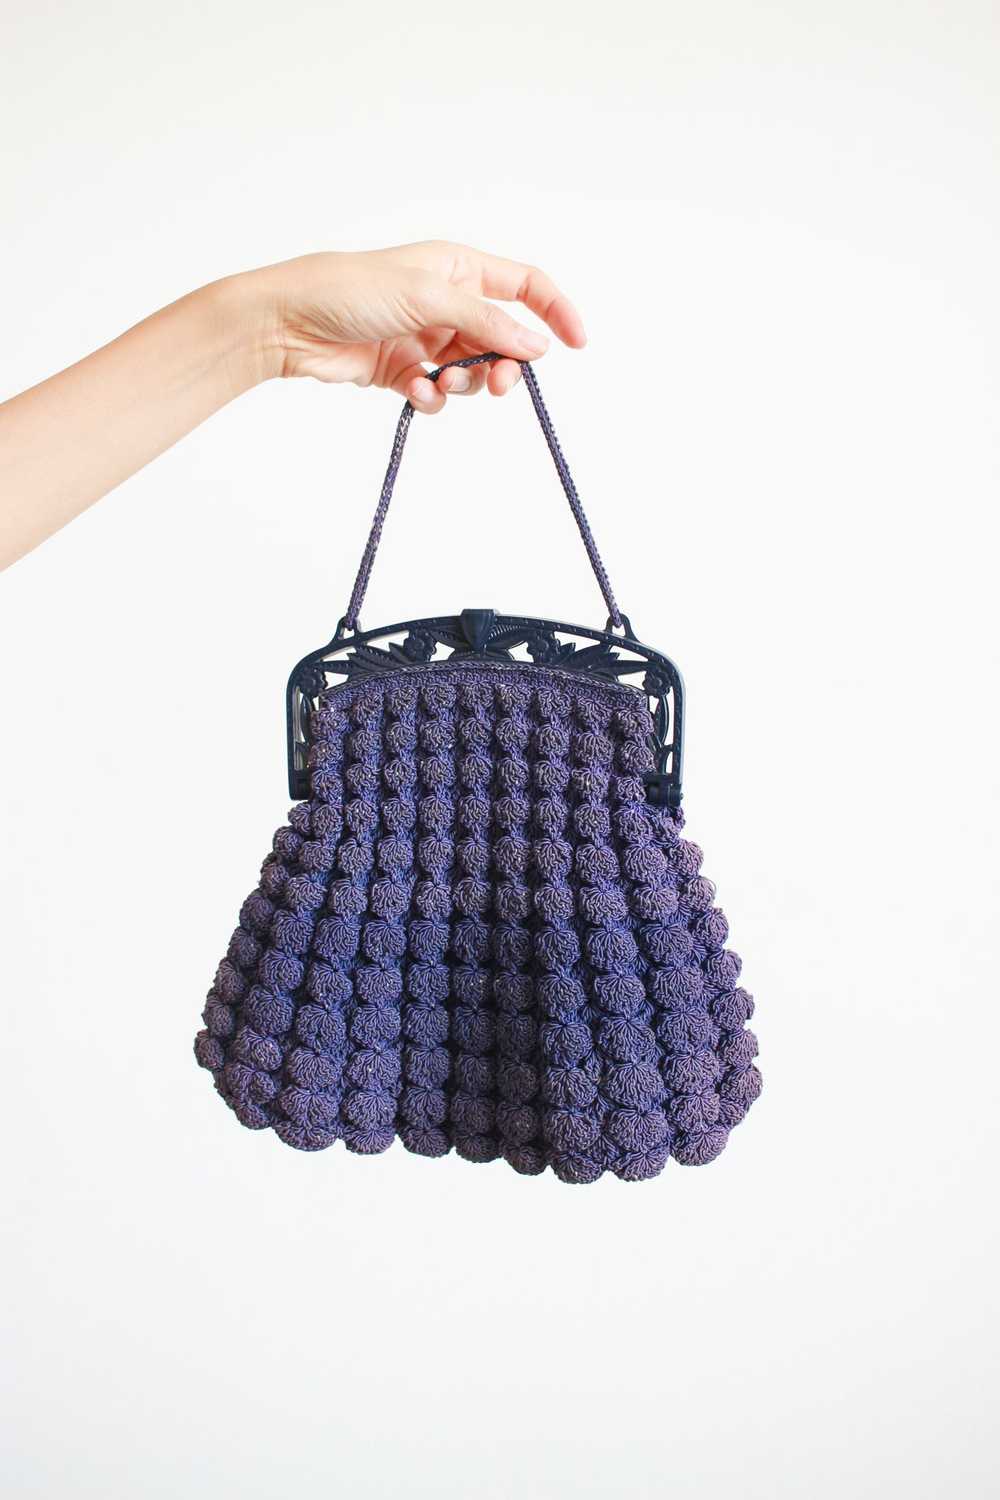 1930s Voilet Berry Knit Handbag - image 4